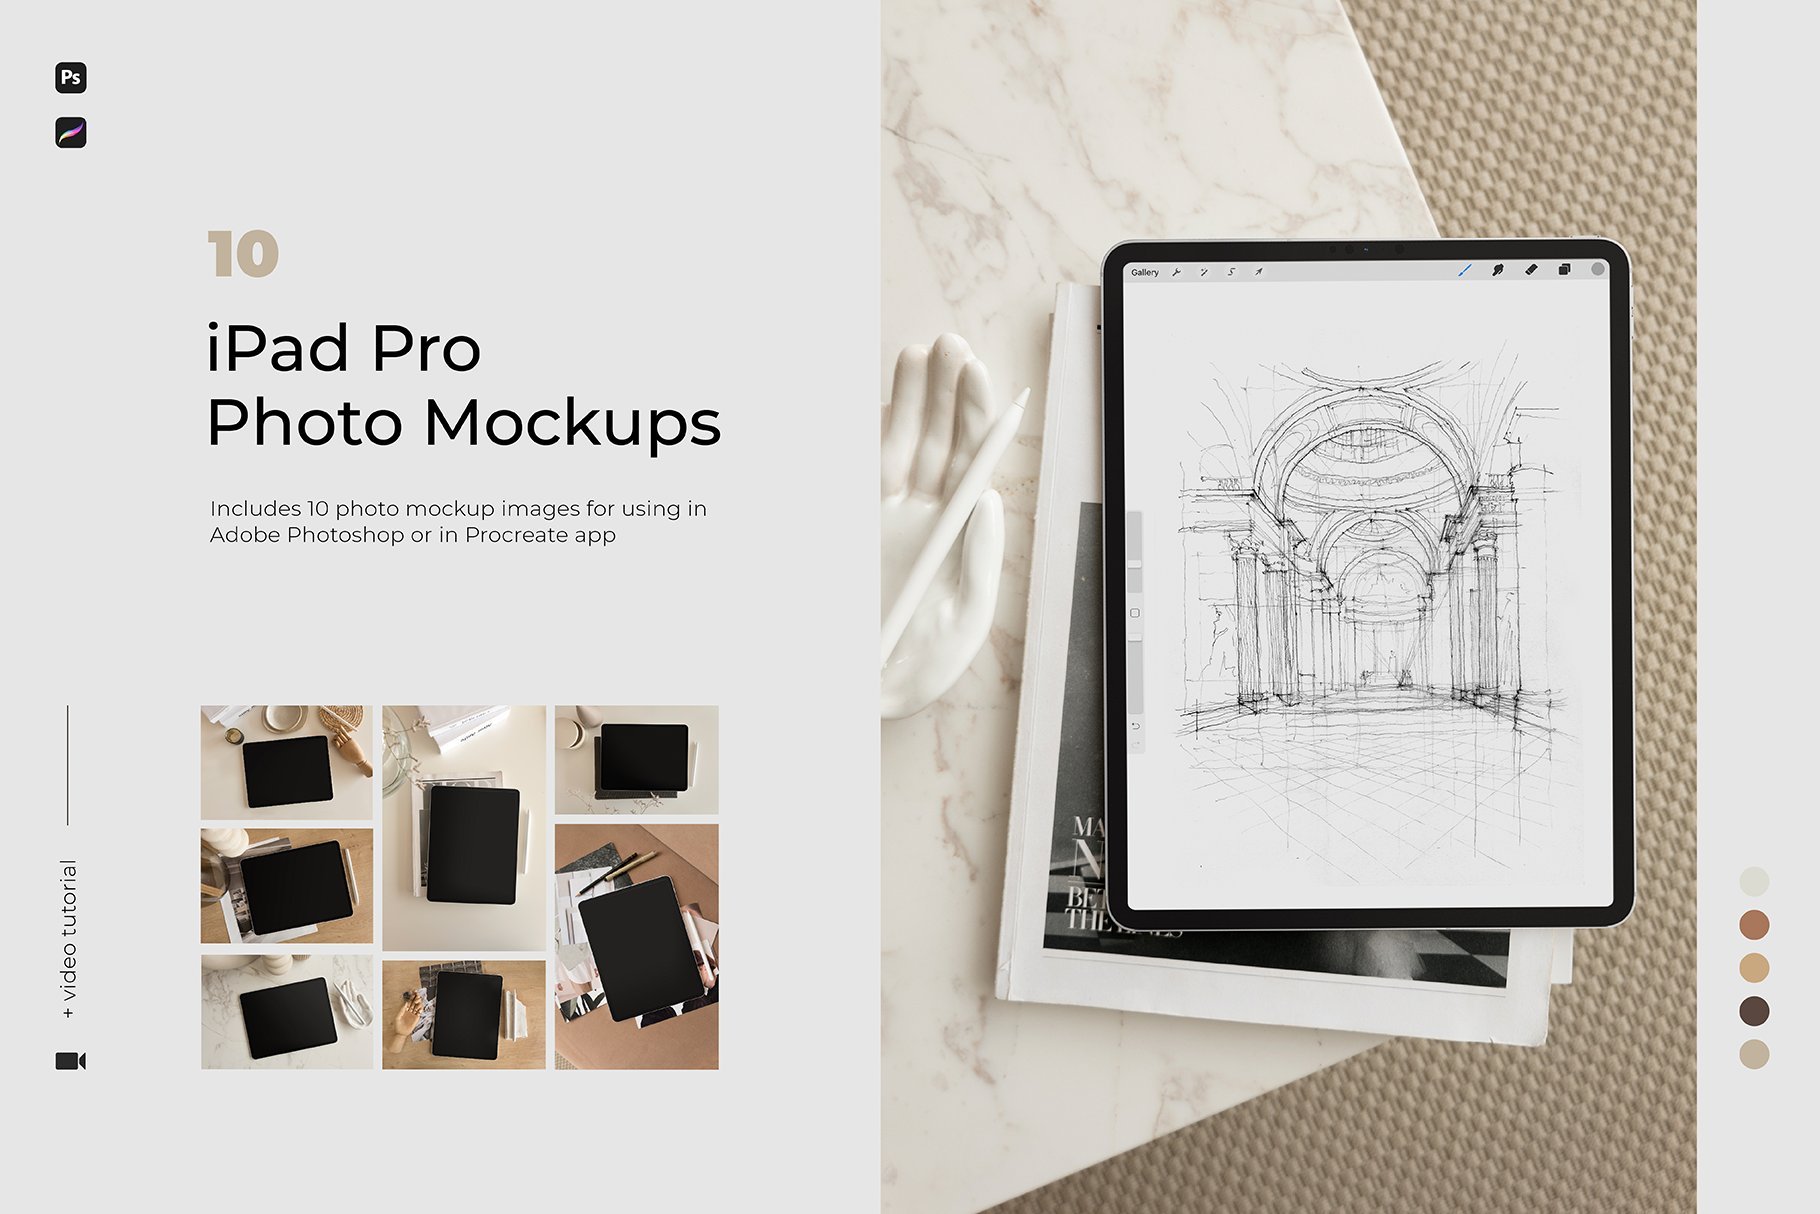 IPad Pro Photo Mockups cover image.